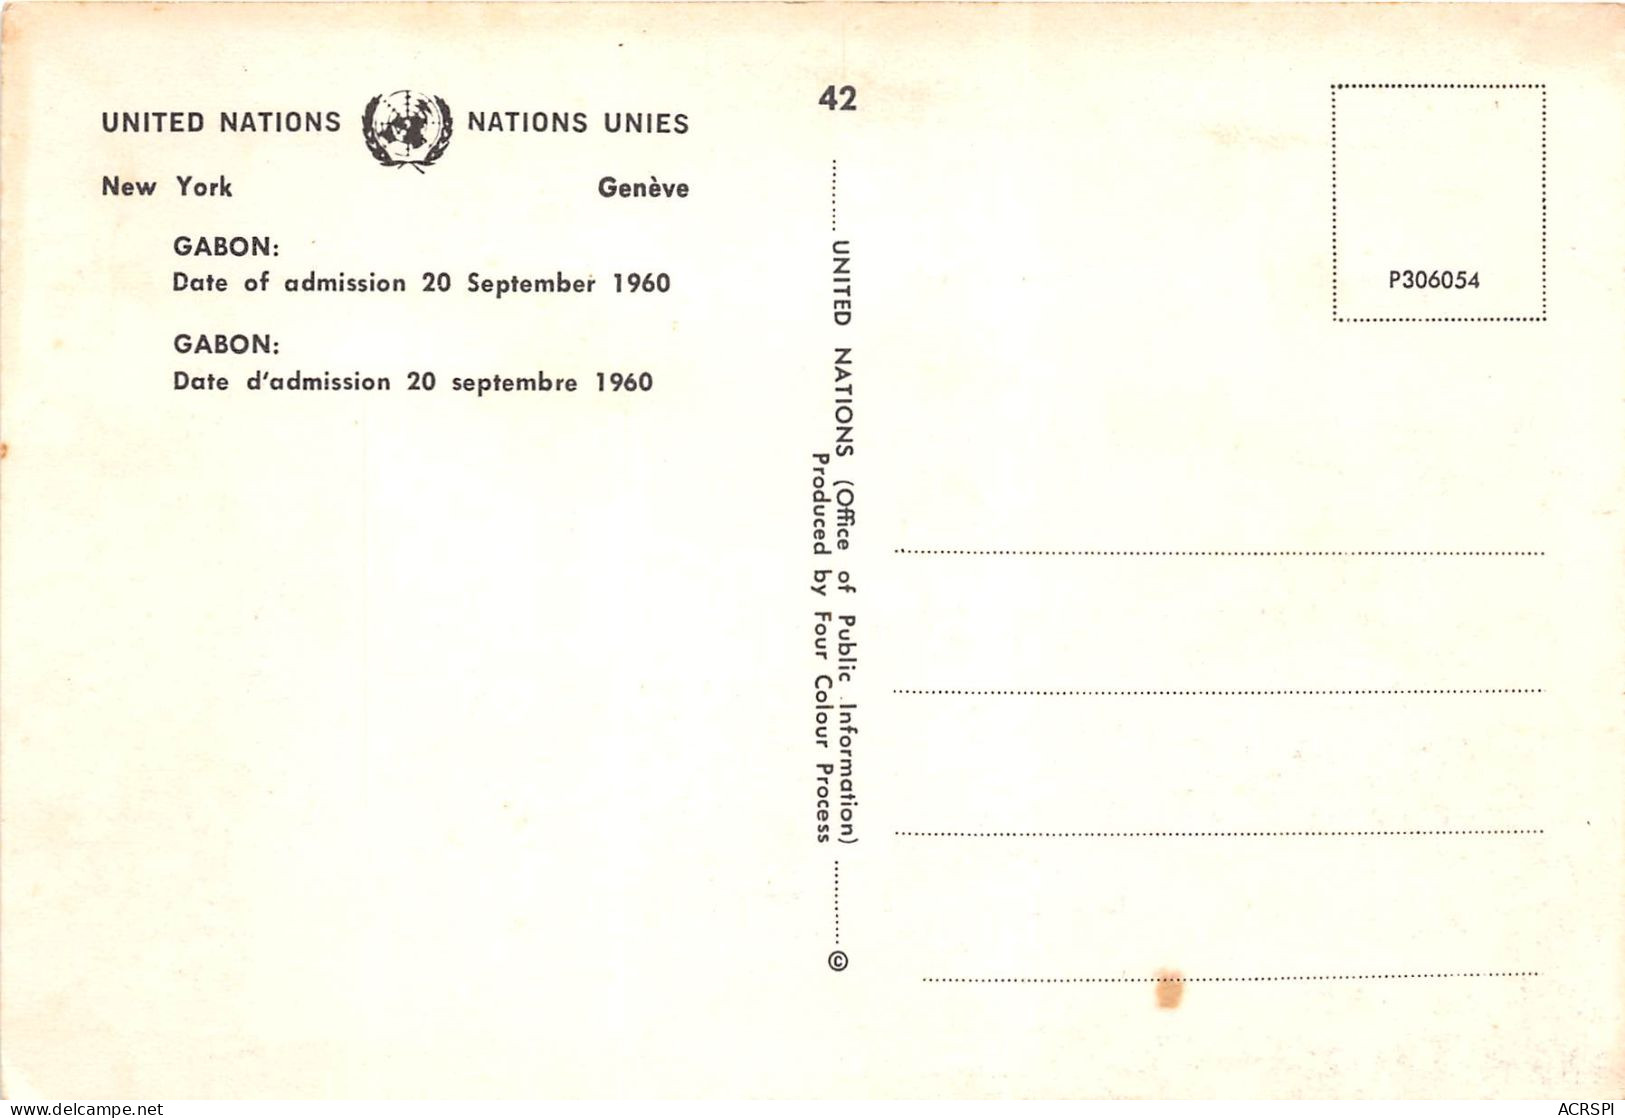 GABON United Nations 1960 Carte 3 New York  Nations Unies  (scan Recto-verso) OO 0961 - Gabun